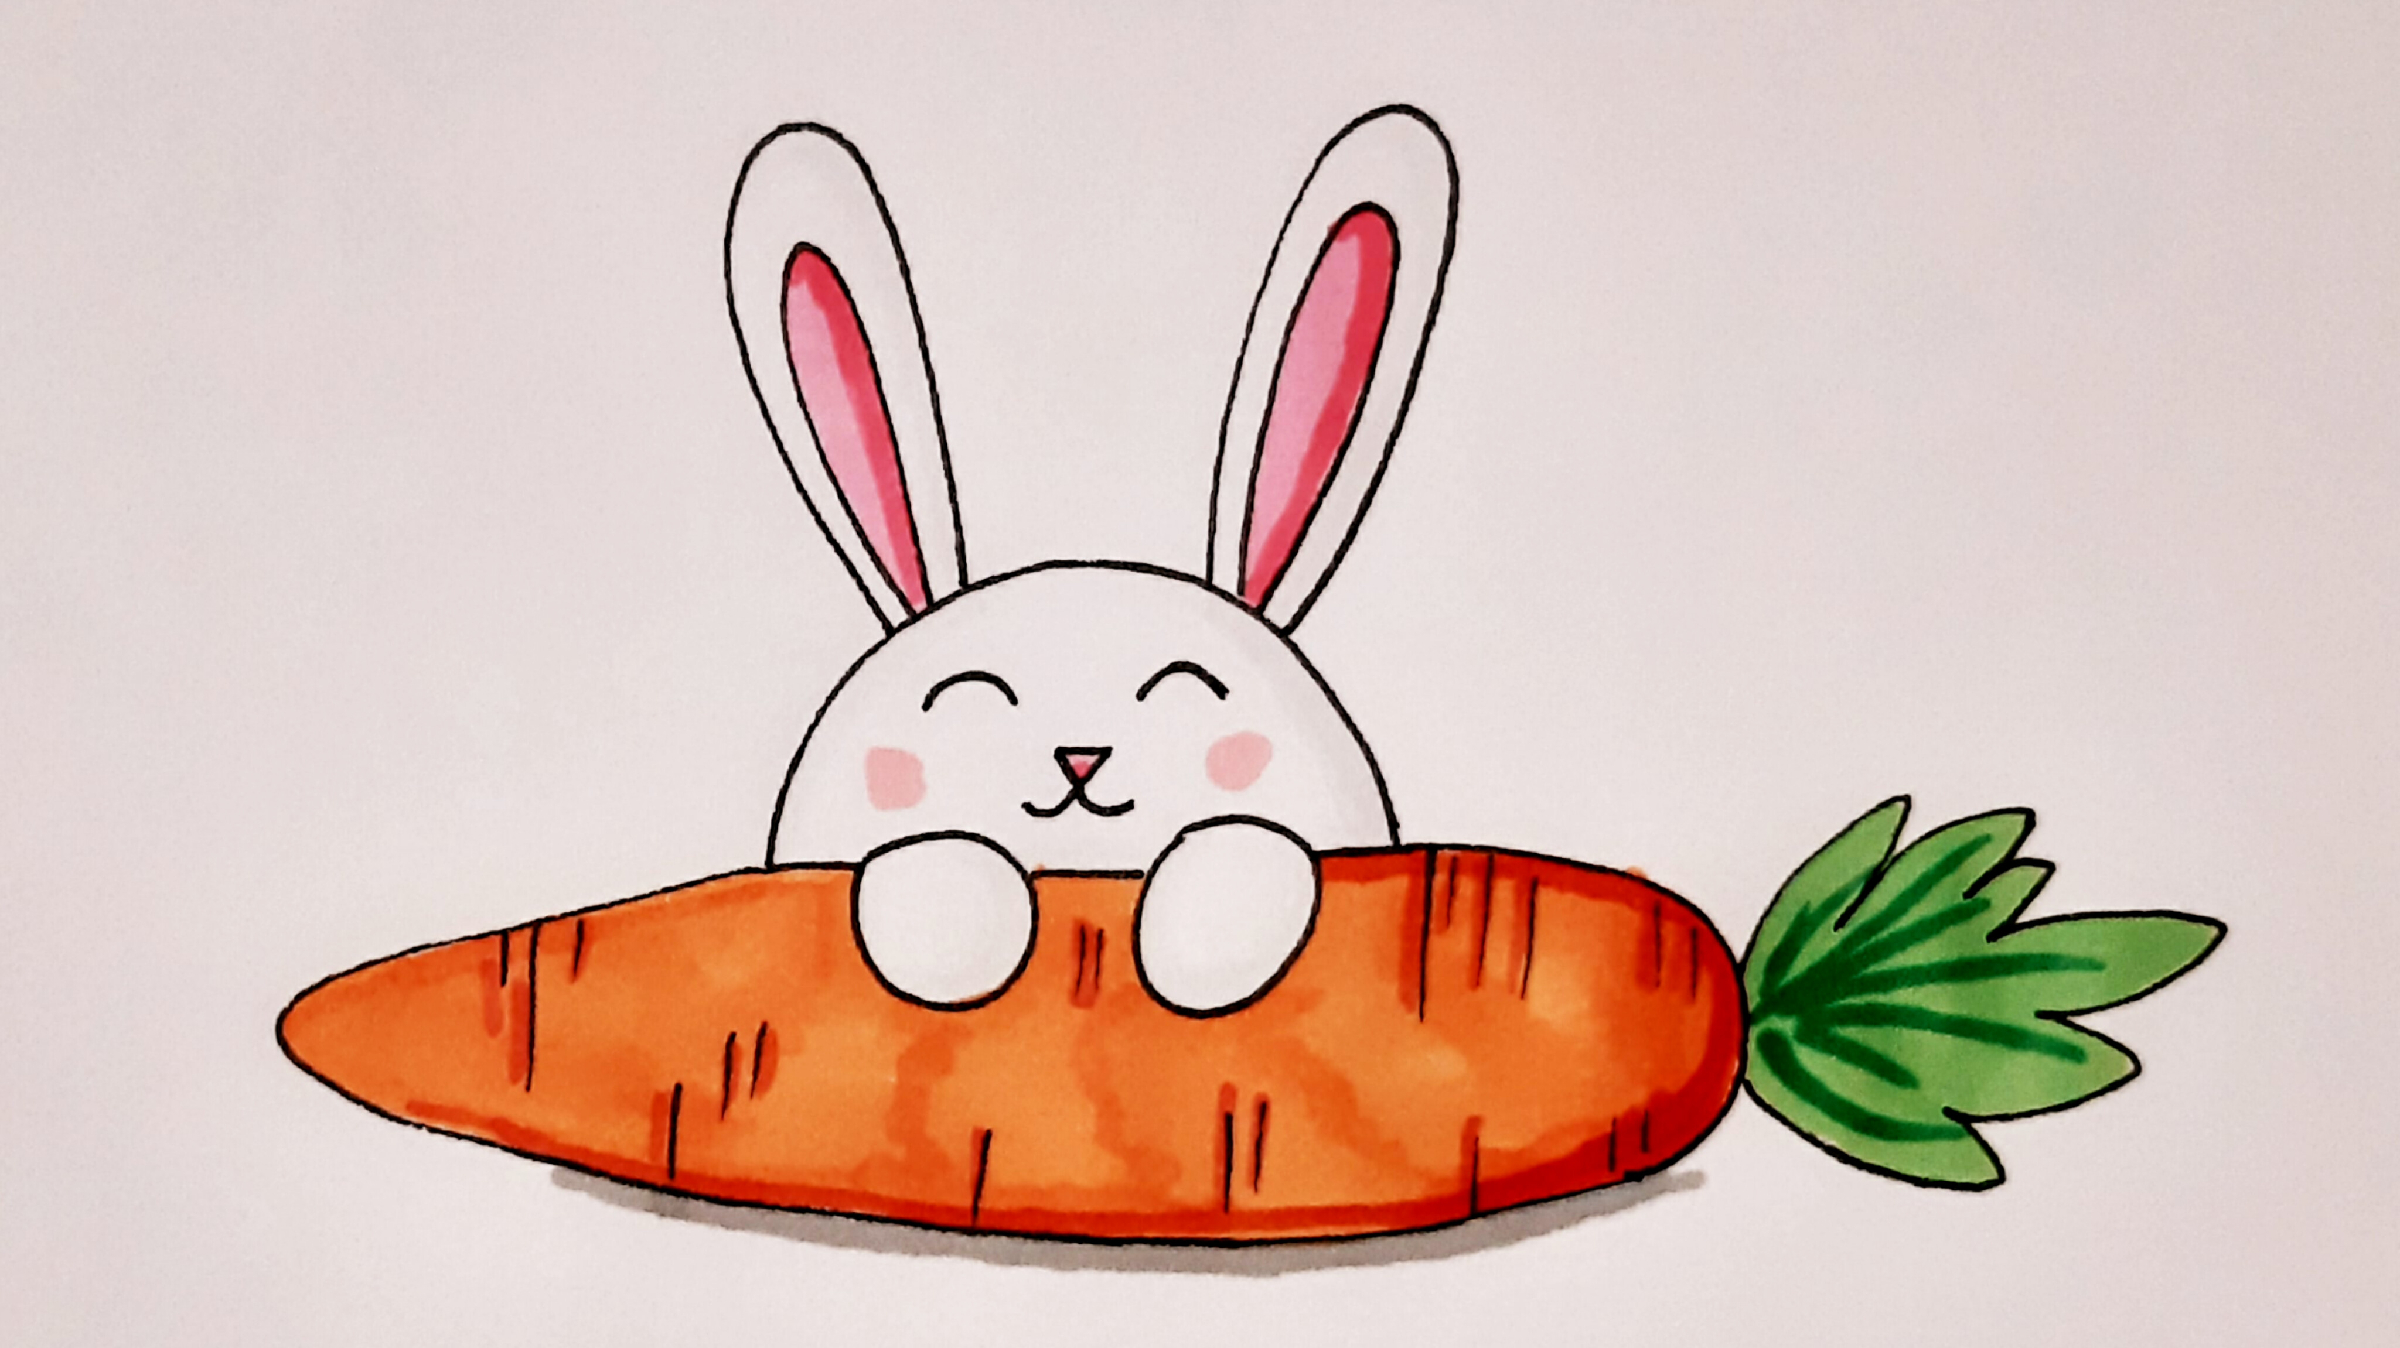 Заяц с морковкой рисунок